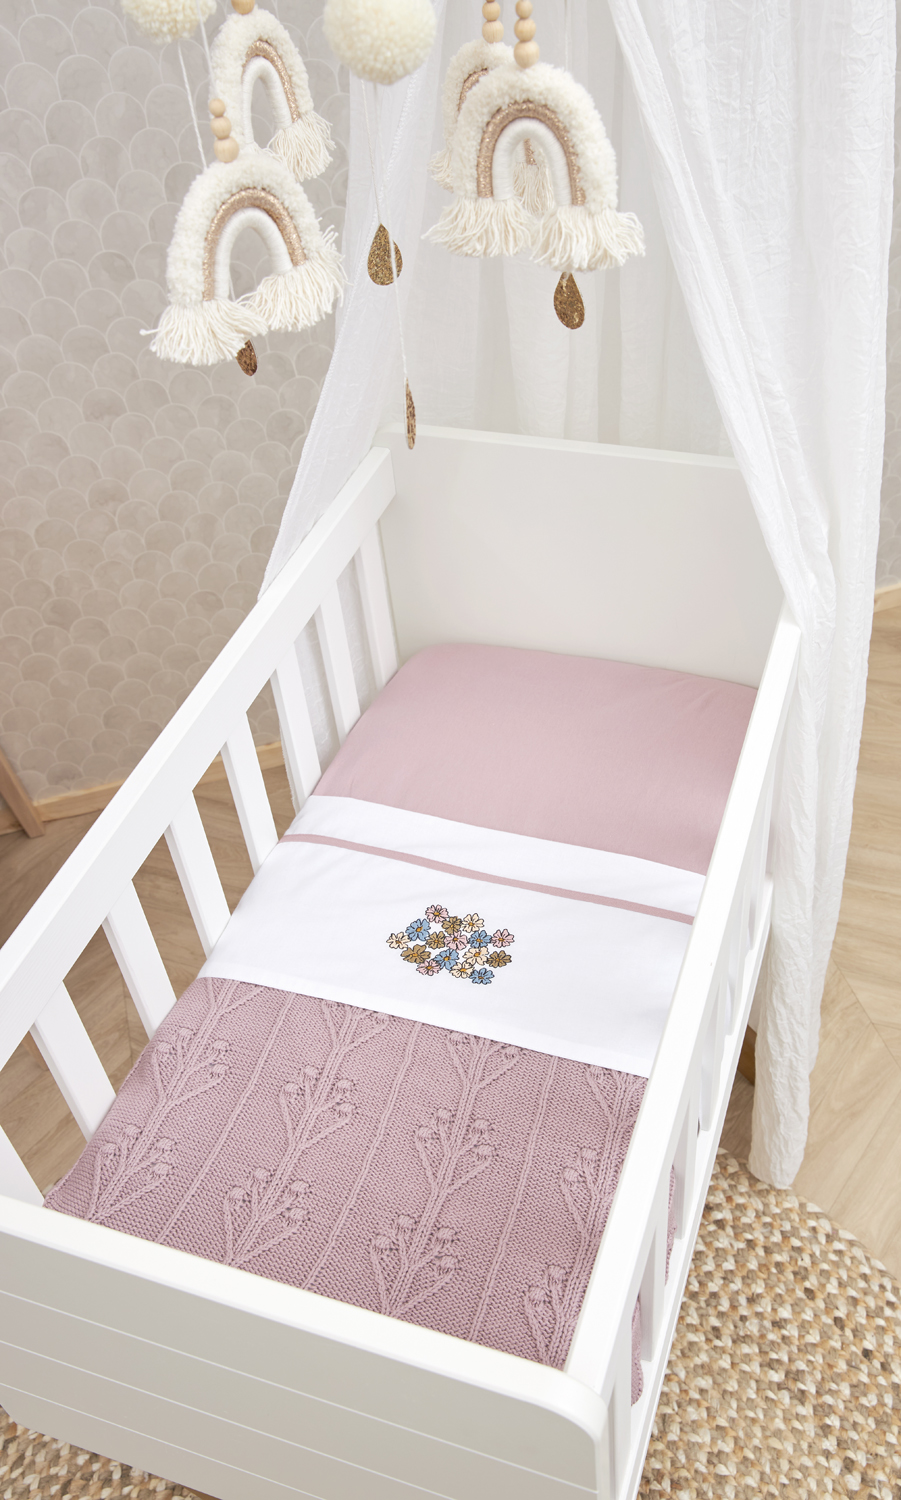 Cot bed blanket Romantic Flower - lilac - 100x150cm